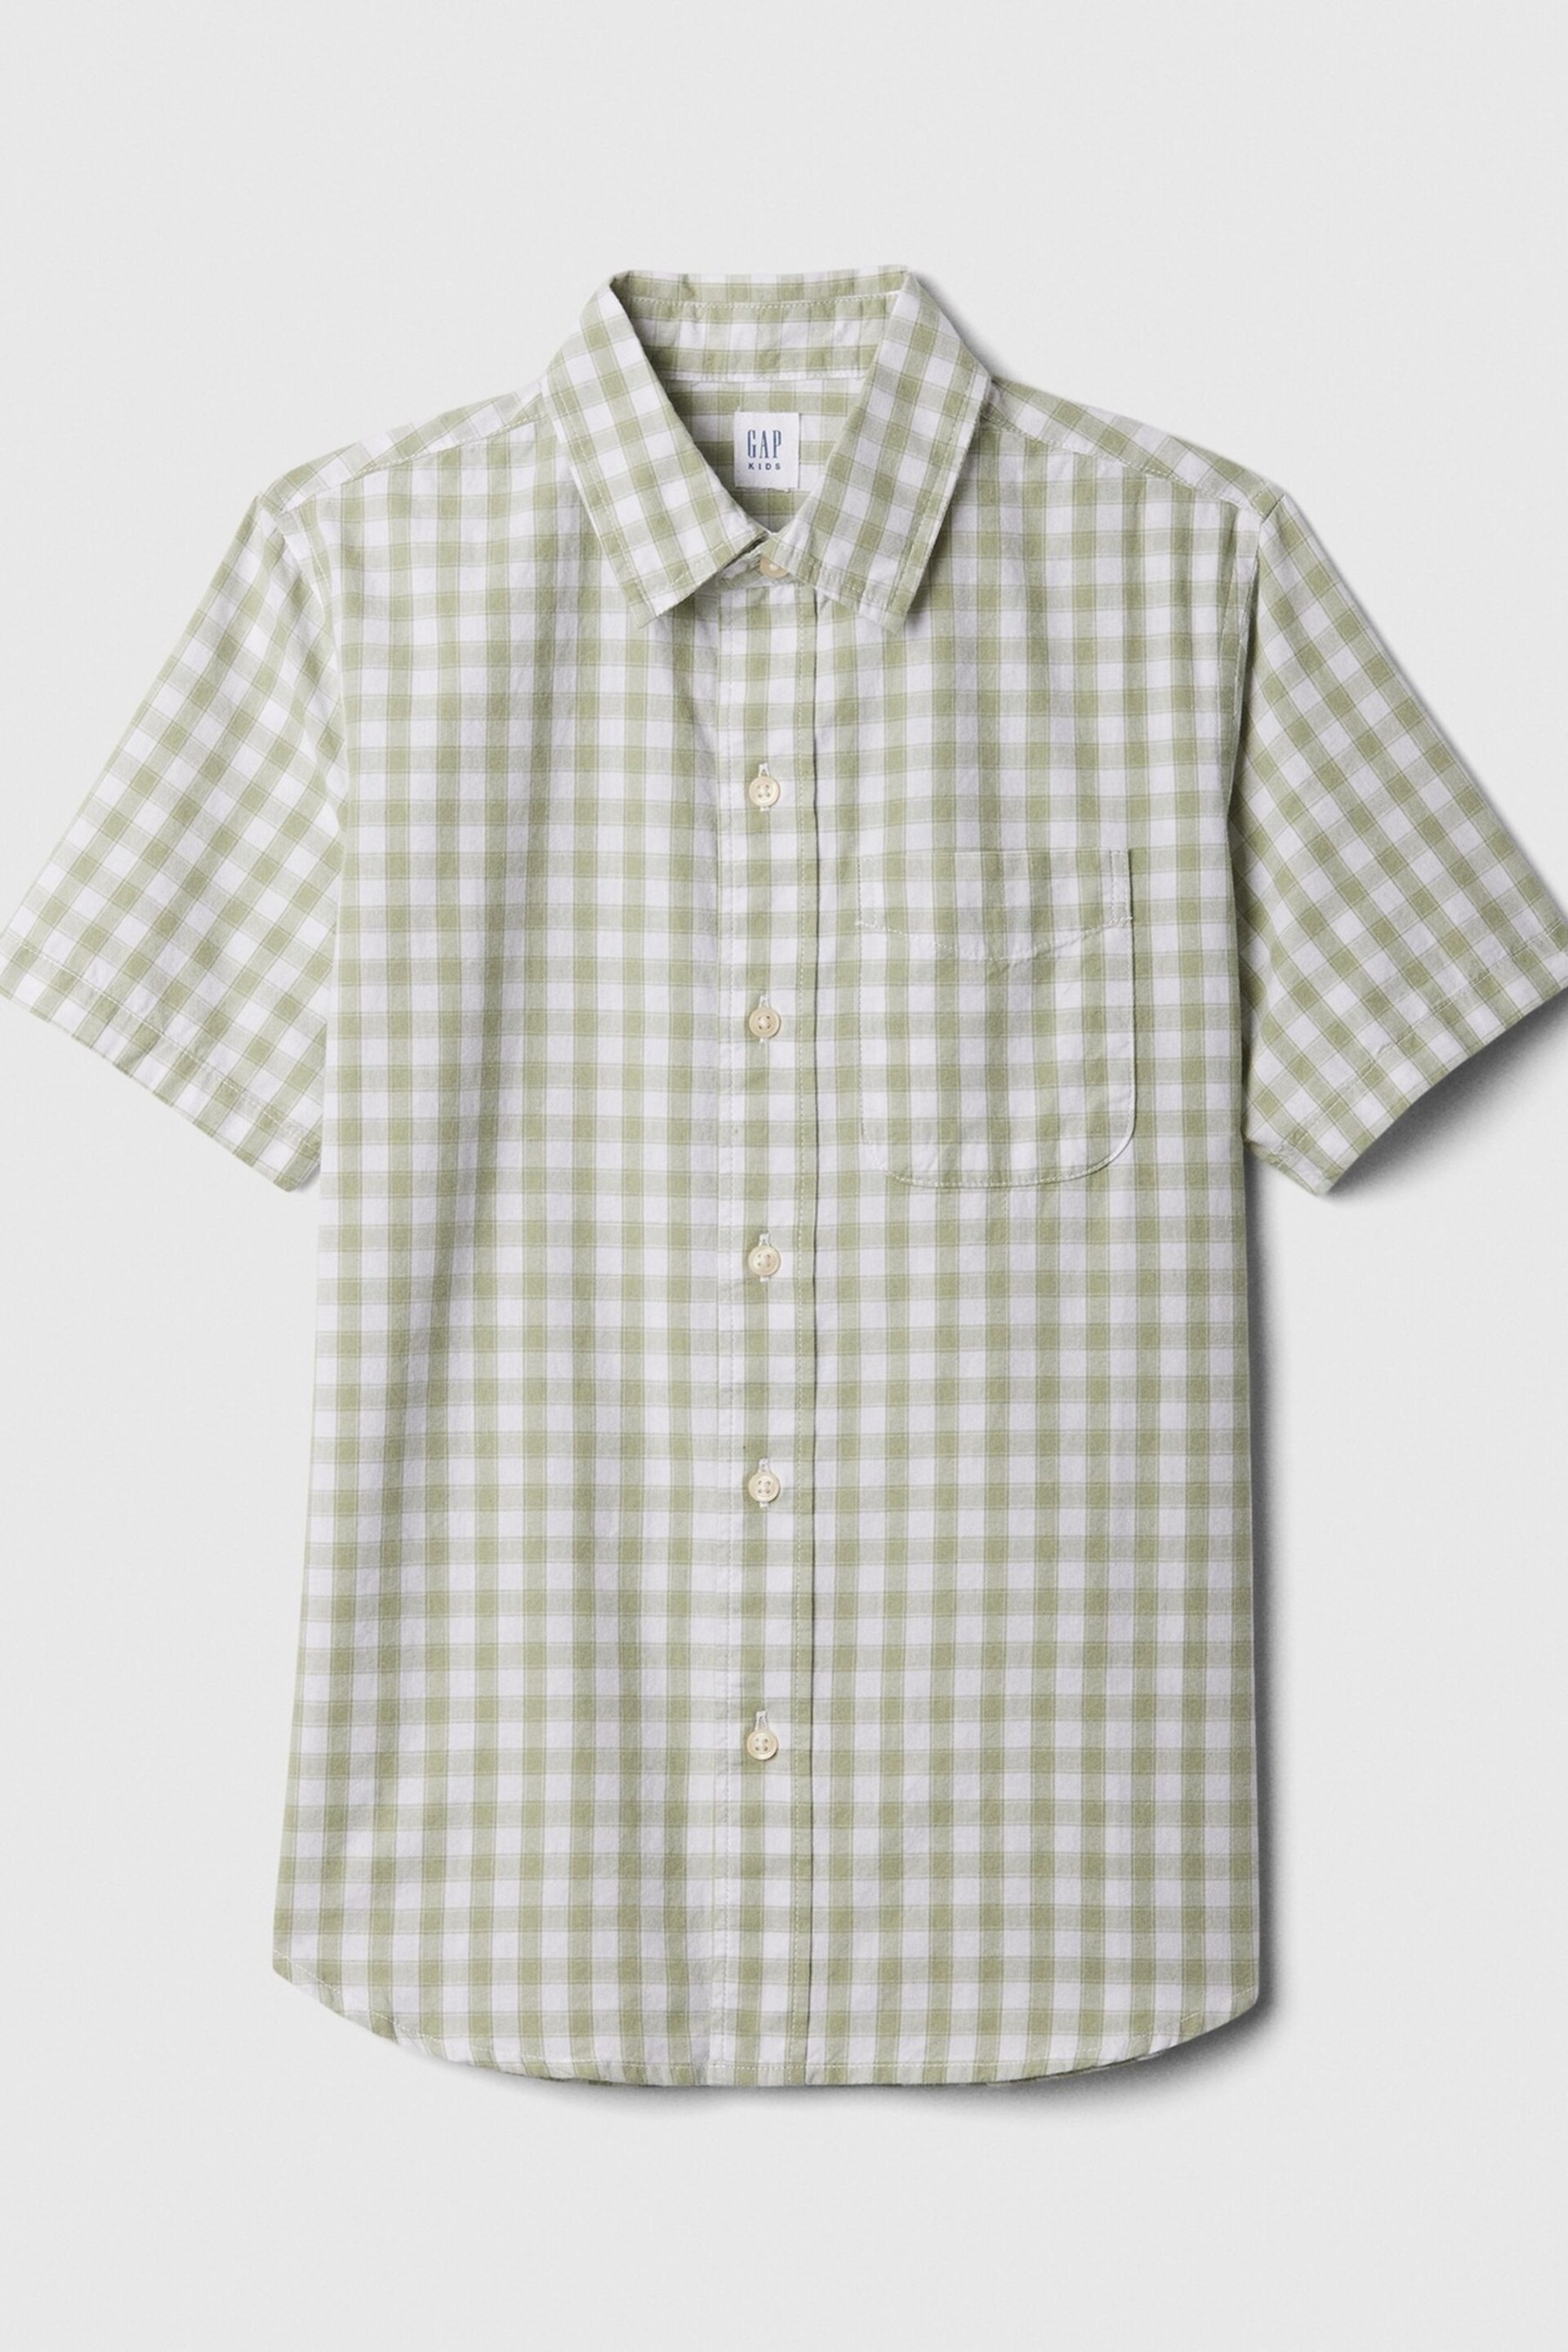 Gap Green/White Check Poplin Shirt (4-13yrs) - Image 1 of 1